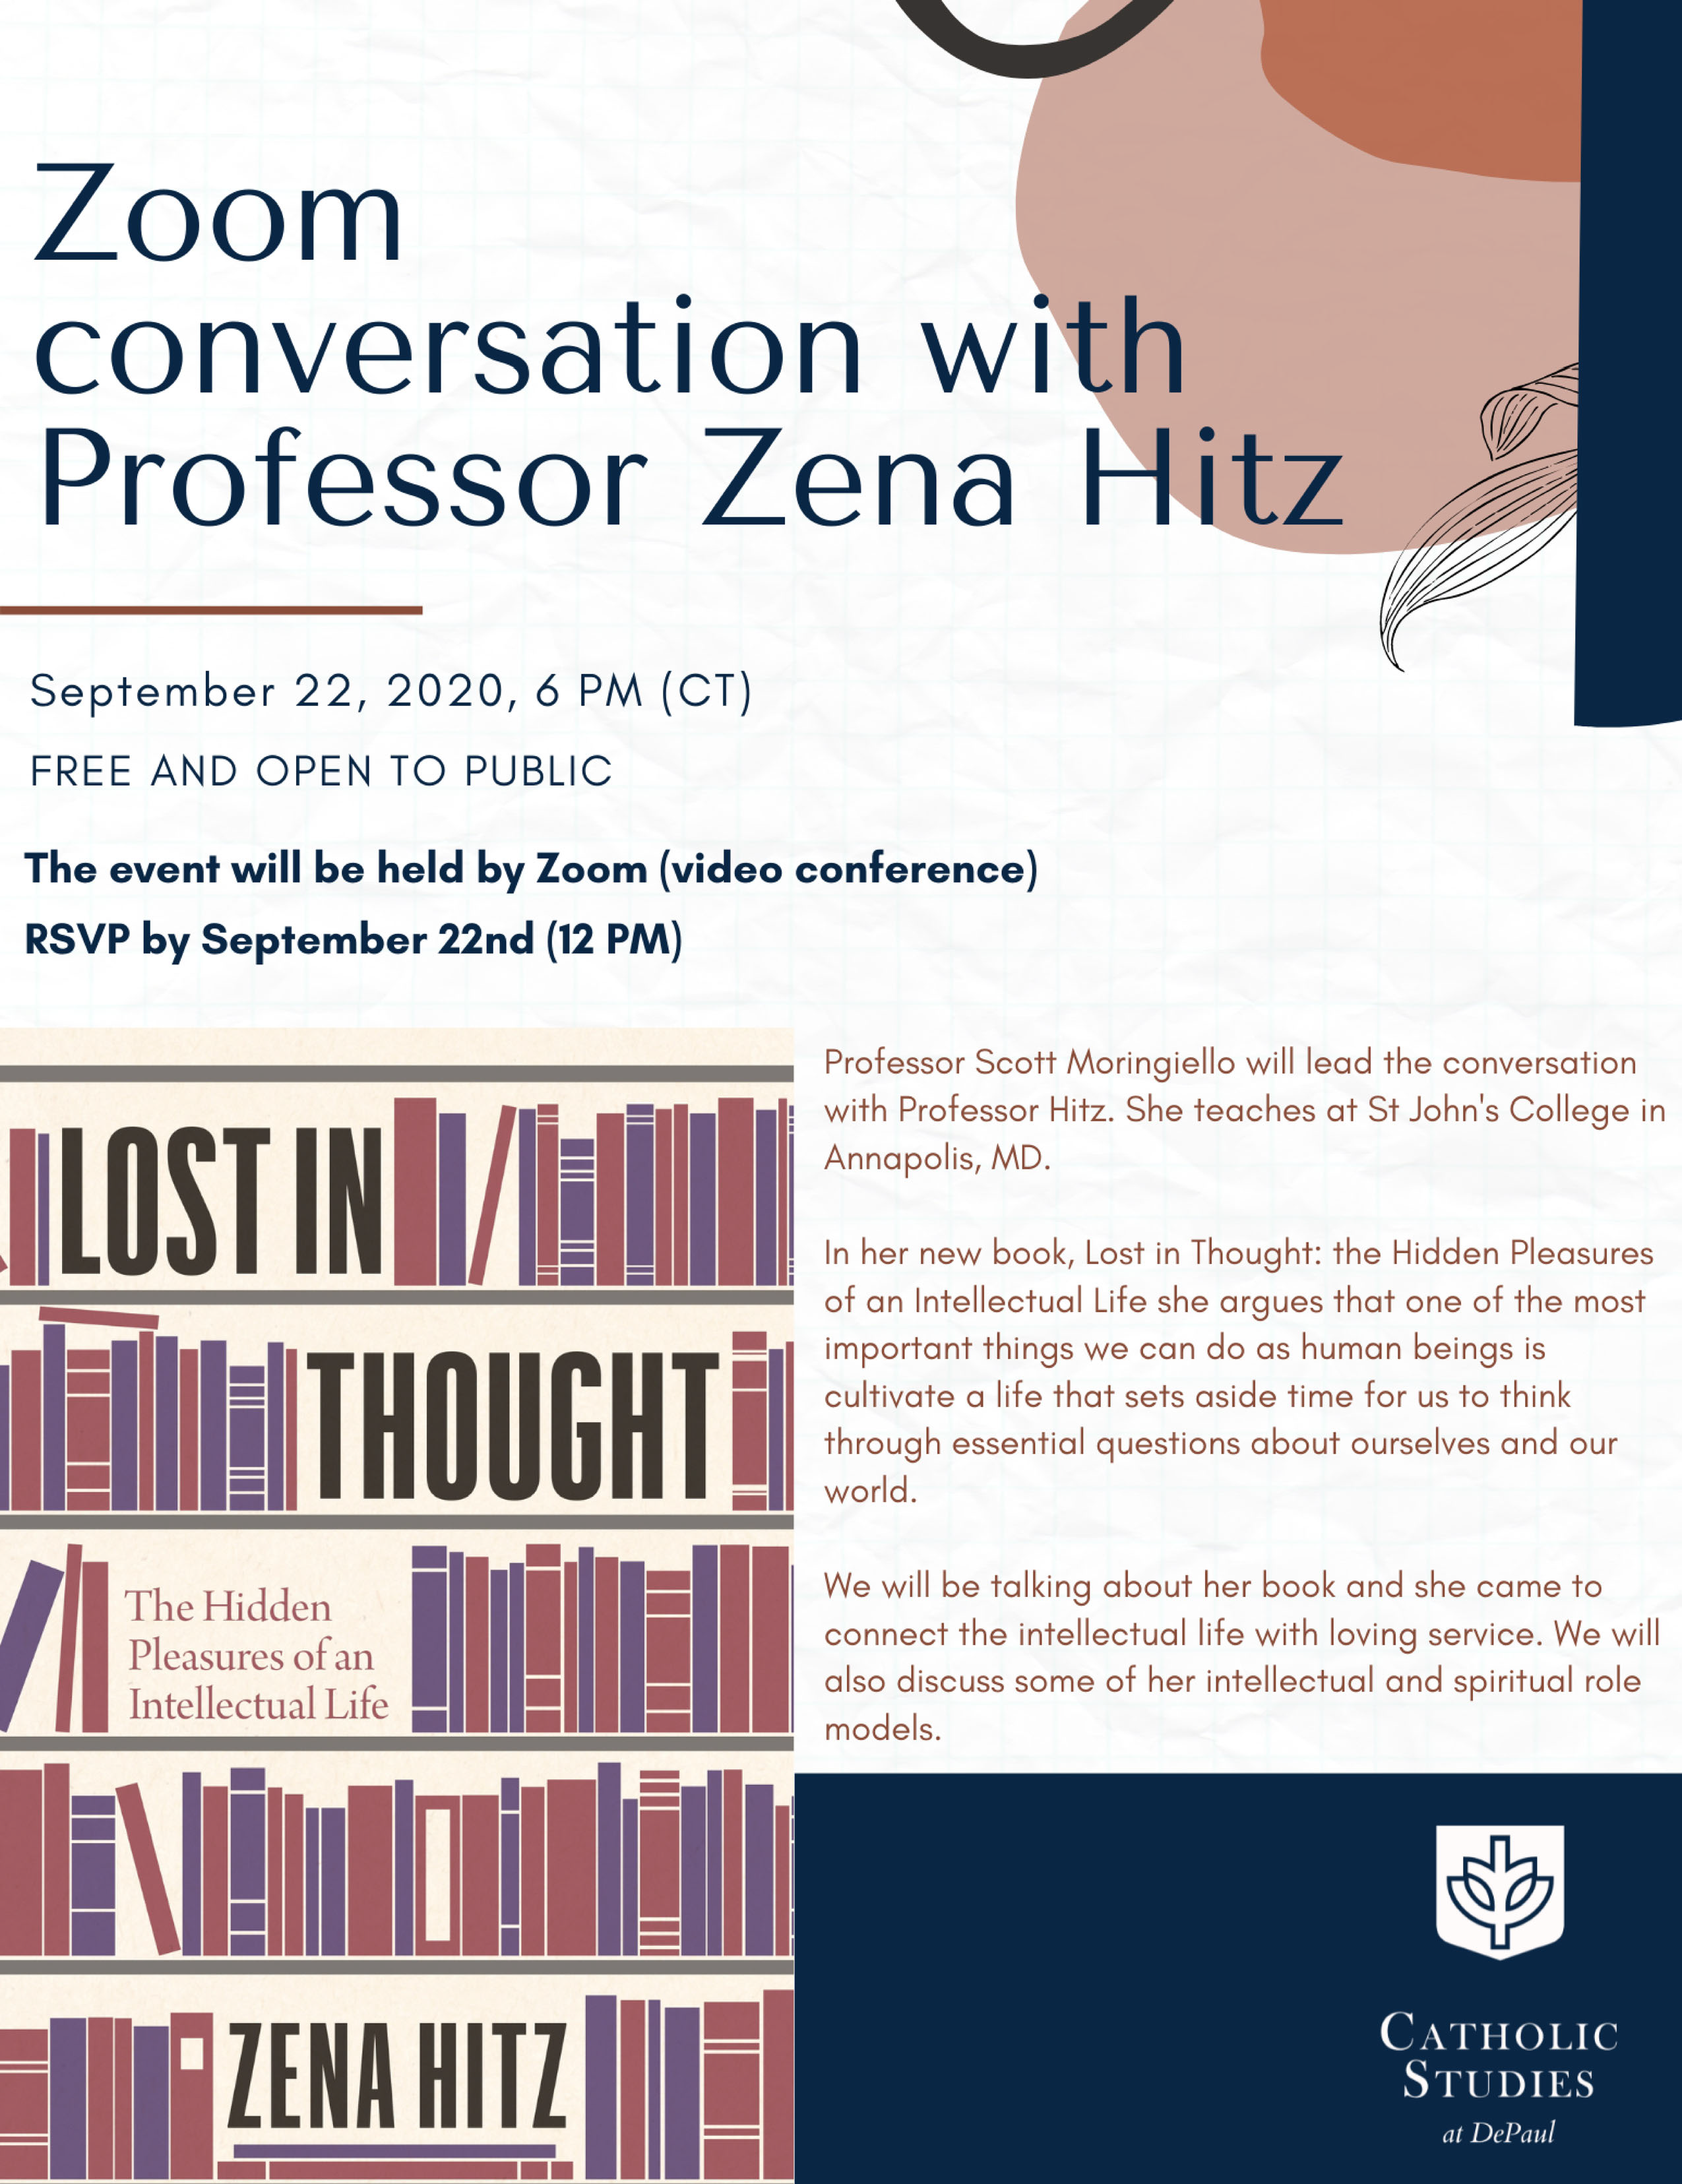 A Zoom Conversation with Zena Hitz